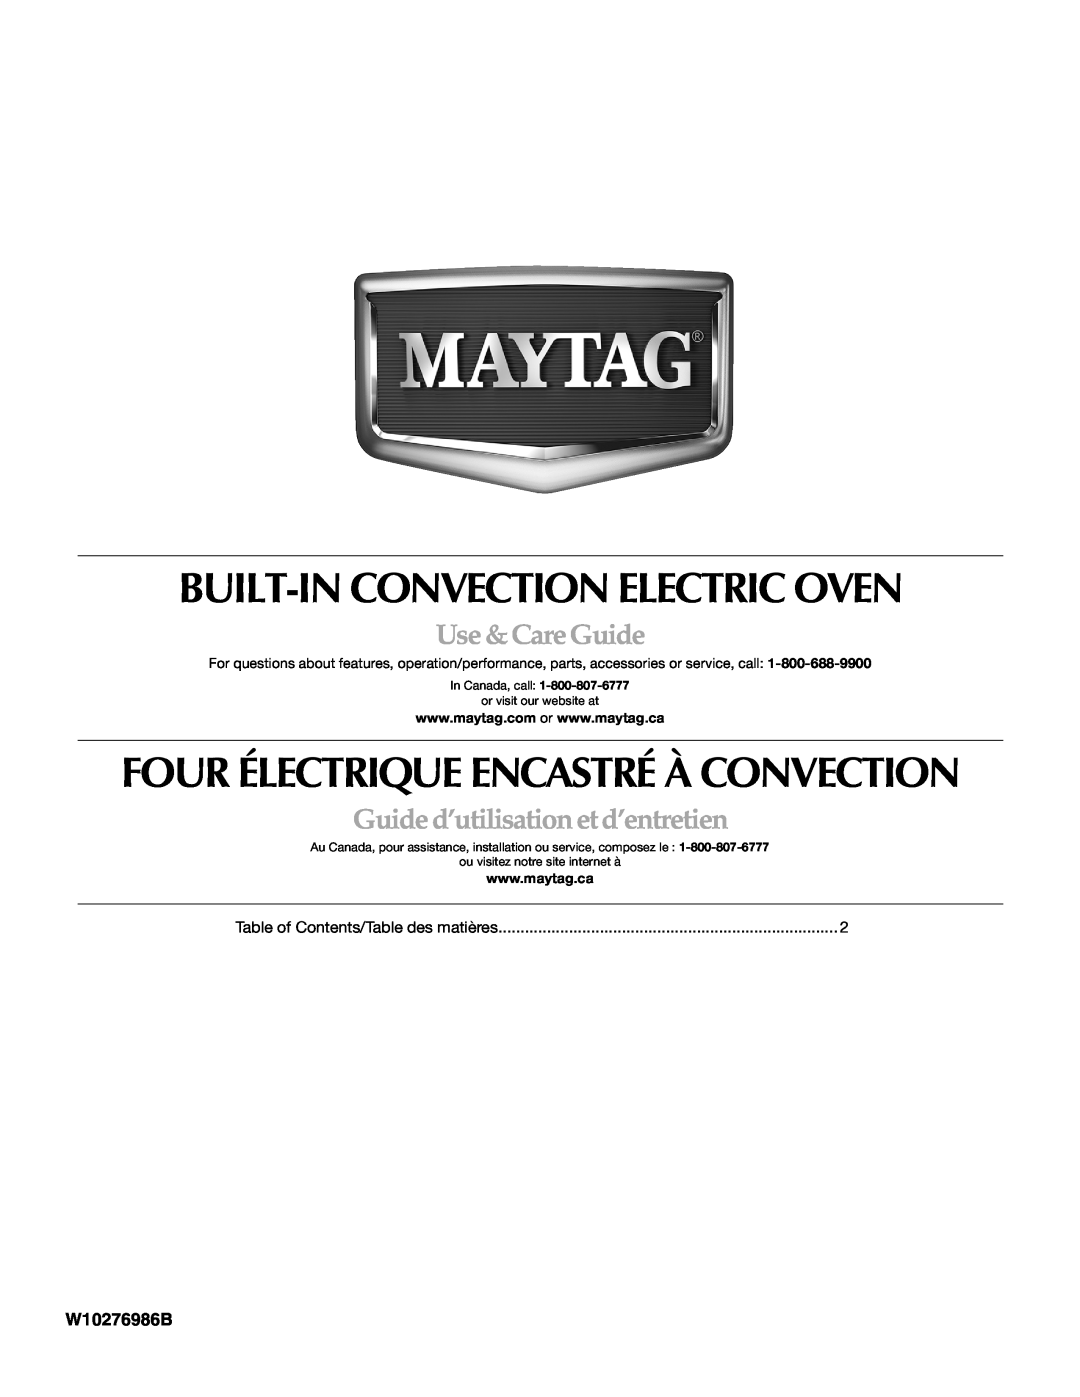 Maytag W10276986B manual Use & Care Guide, Guide d’utilisation et d’entretien, Built-Inconvection Electric Oven 